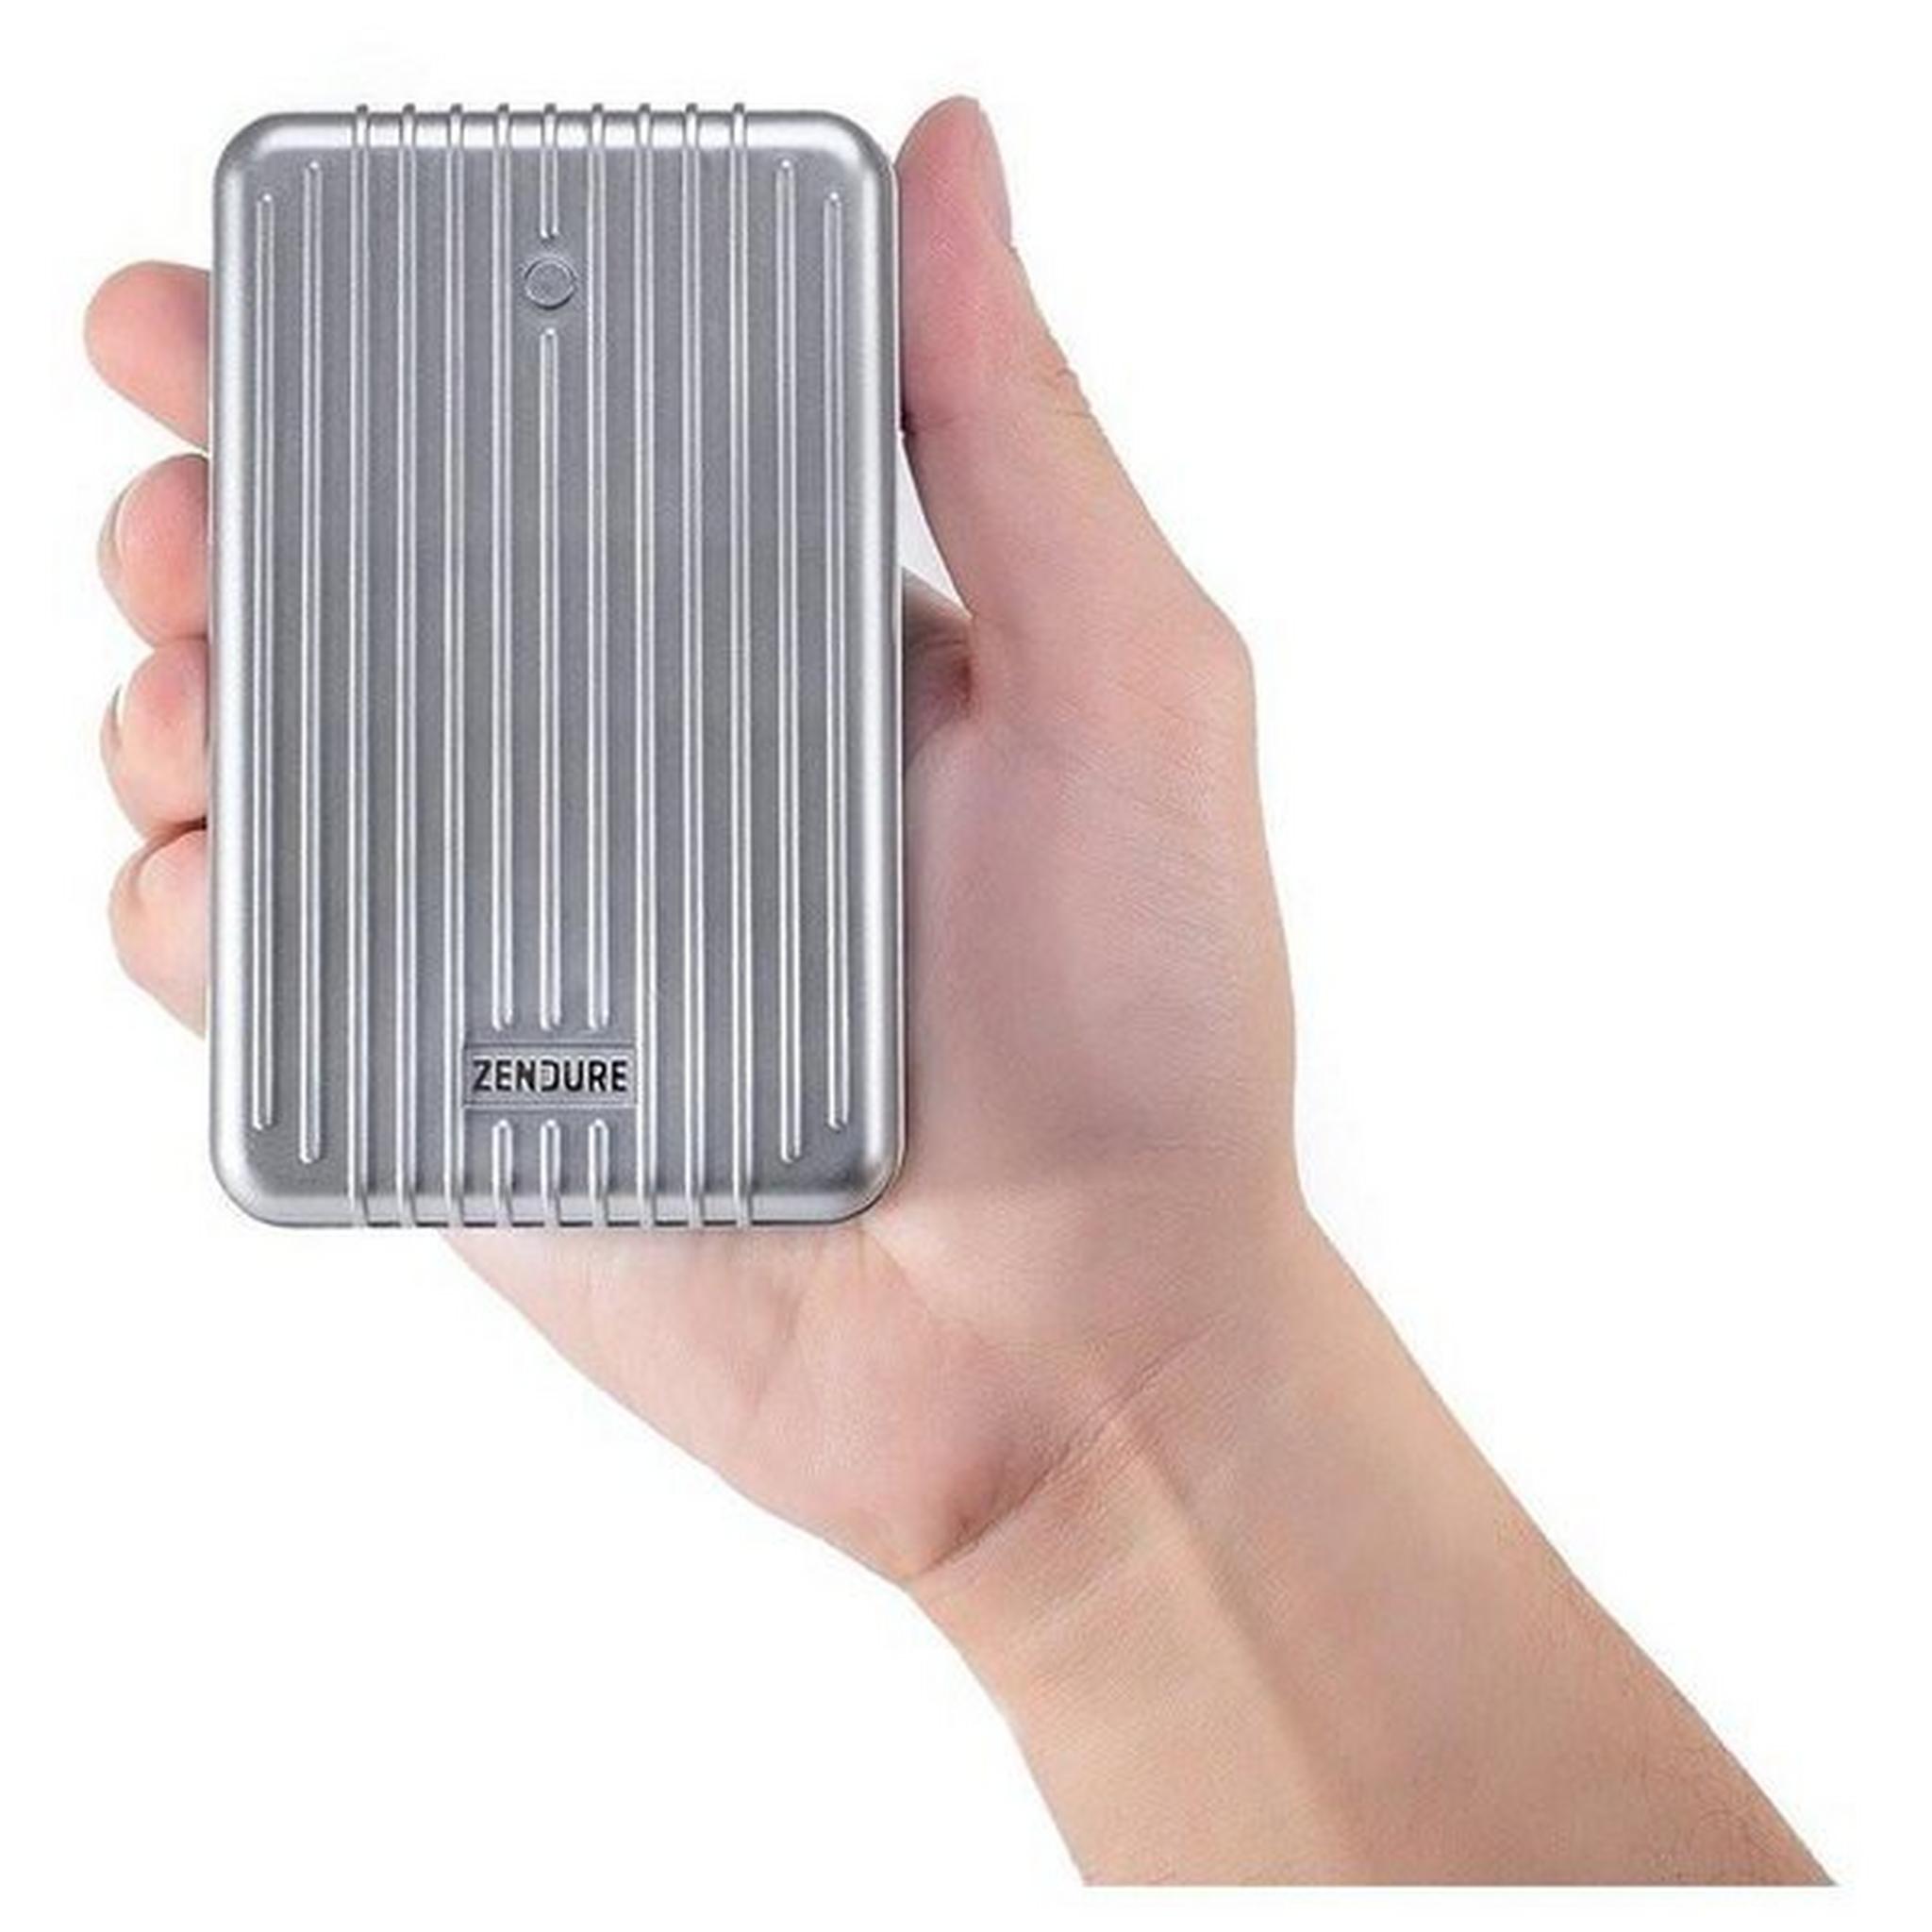 Zendure A8 Portable Power Bank 26,800 mAh - Silver